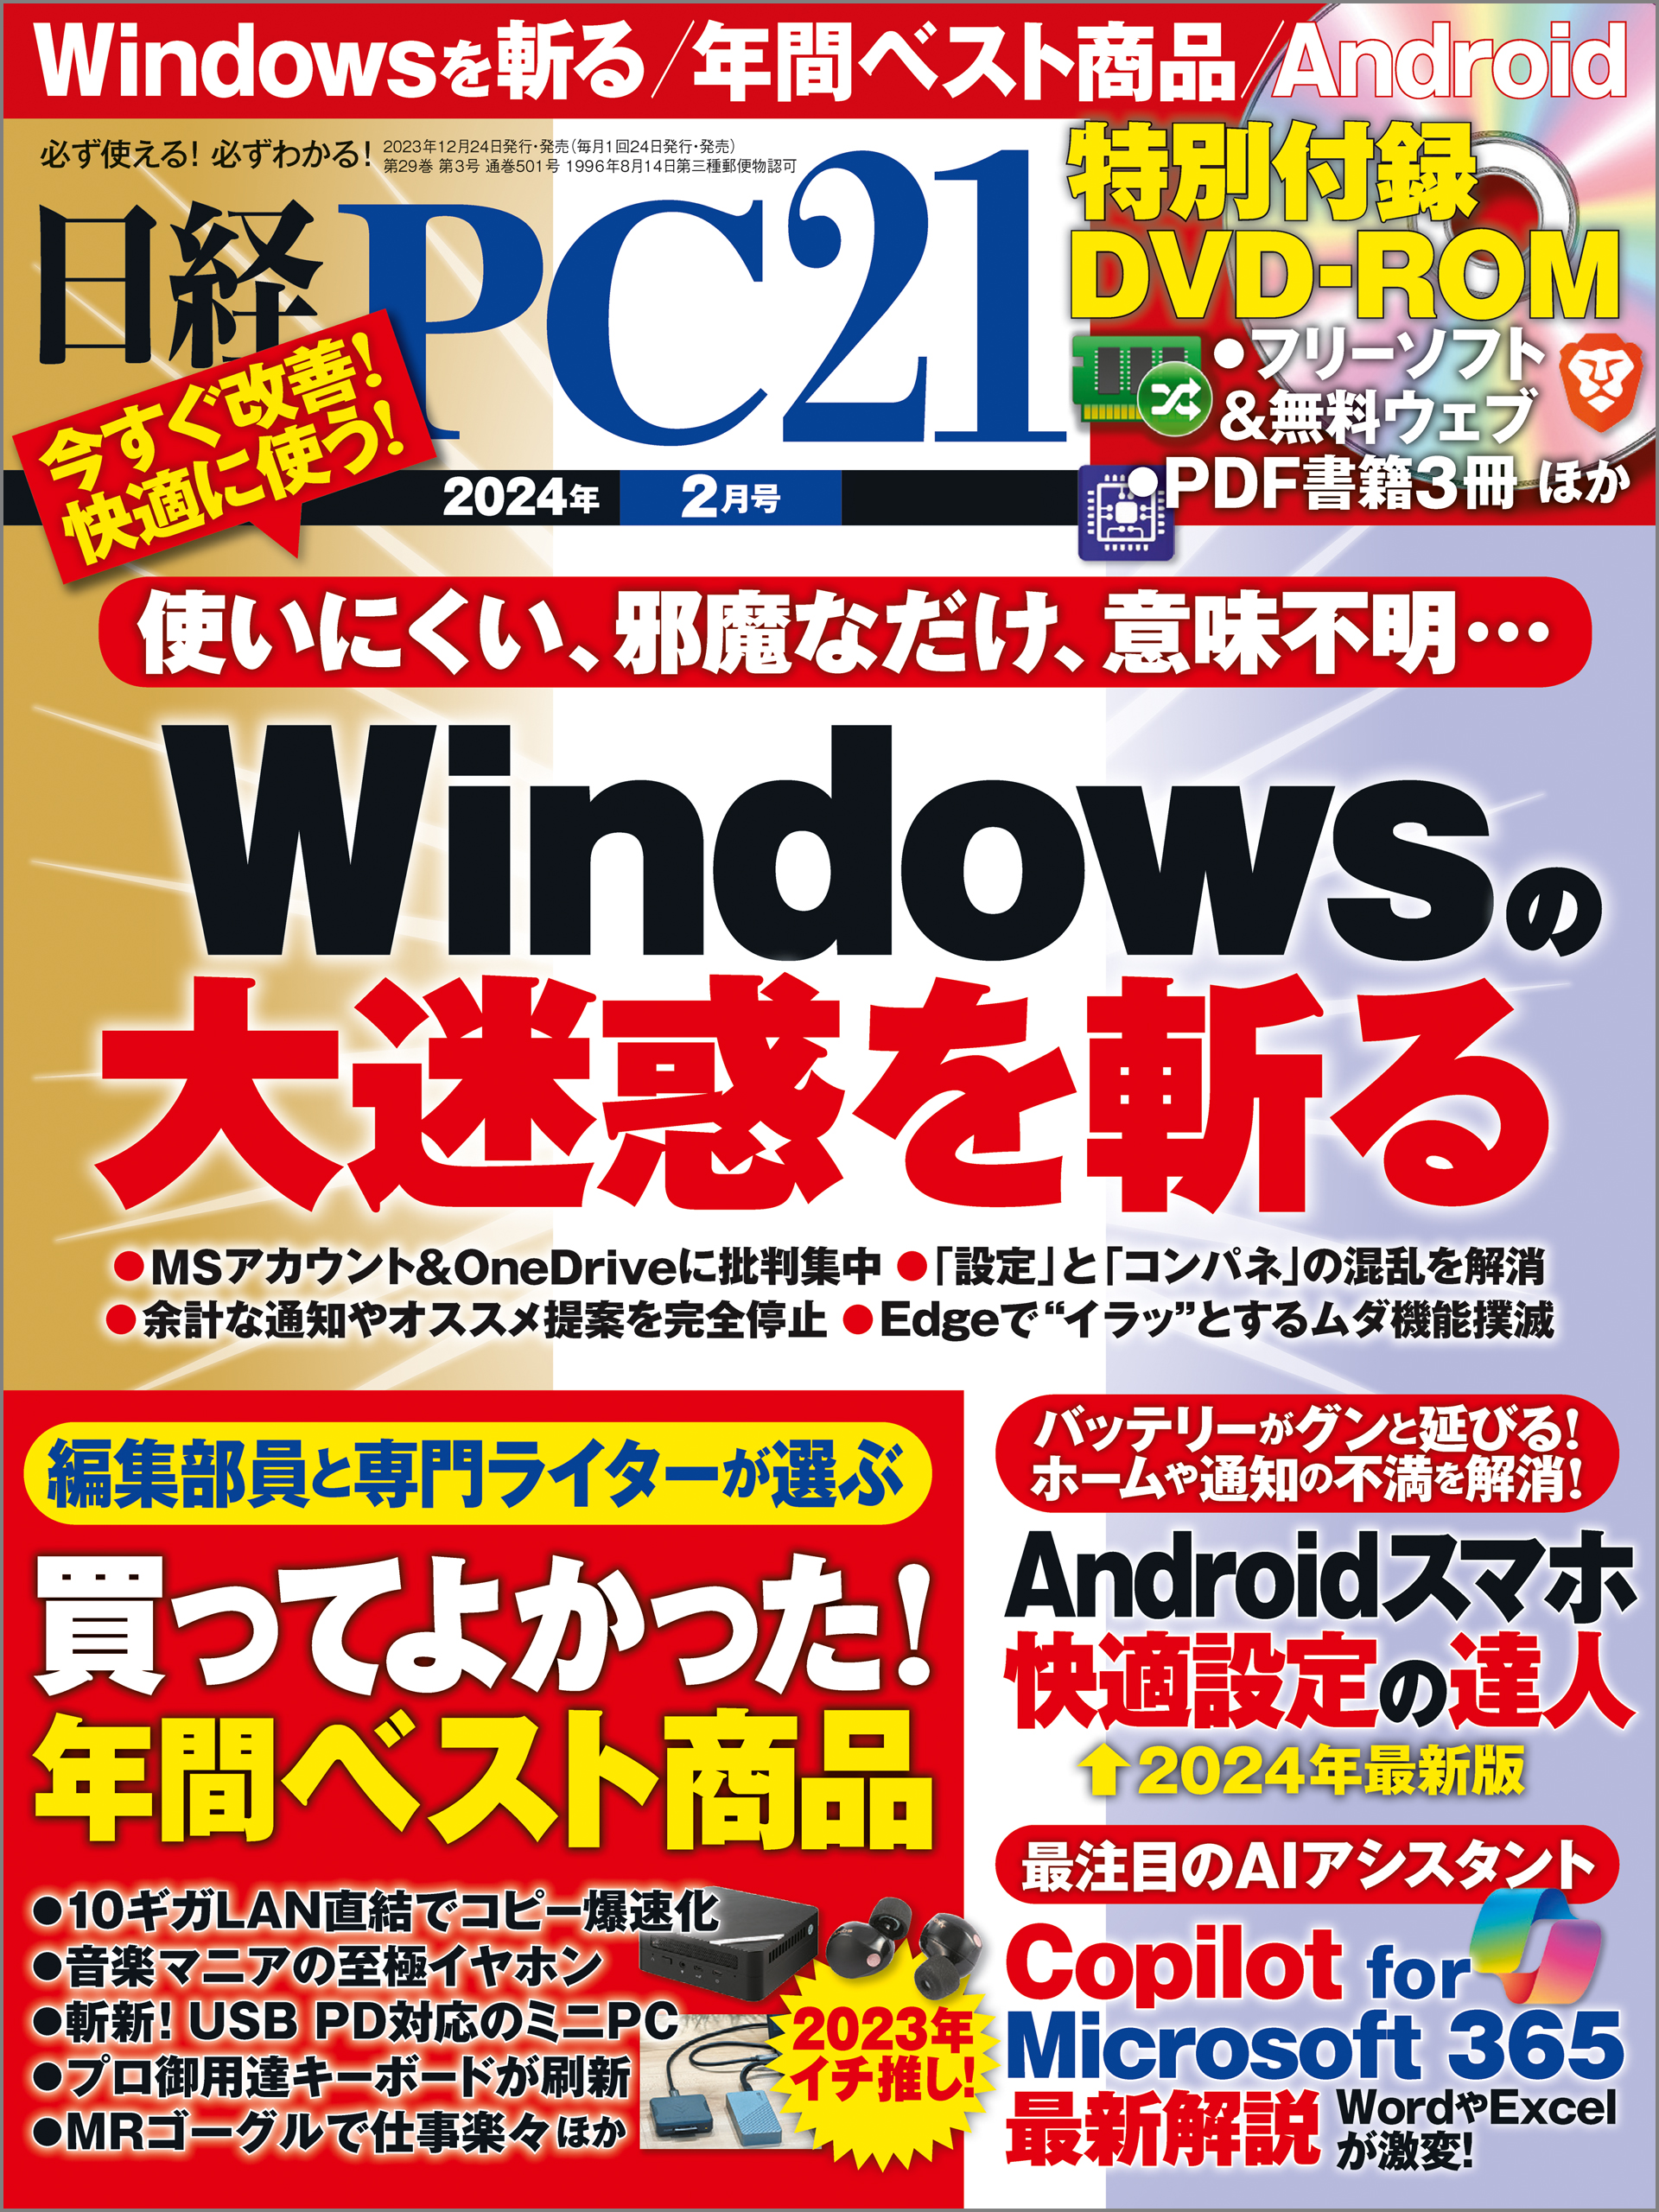 [os]windows 10 11 os pro home日本語正規版プロダクトキーダウンロード版 USB版Microsoft windows 10 11 professional home正規版認証保証win 10 os